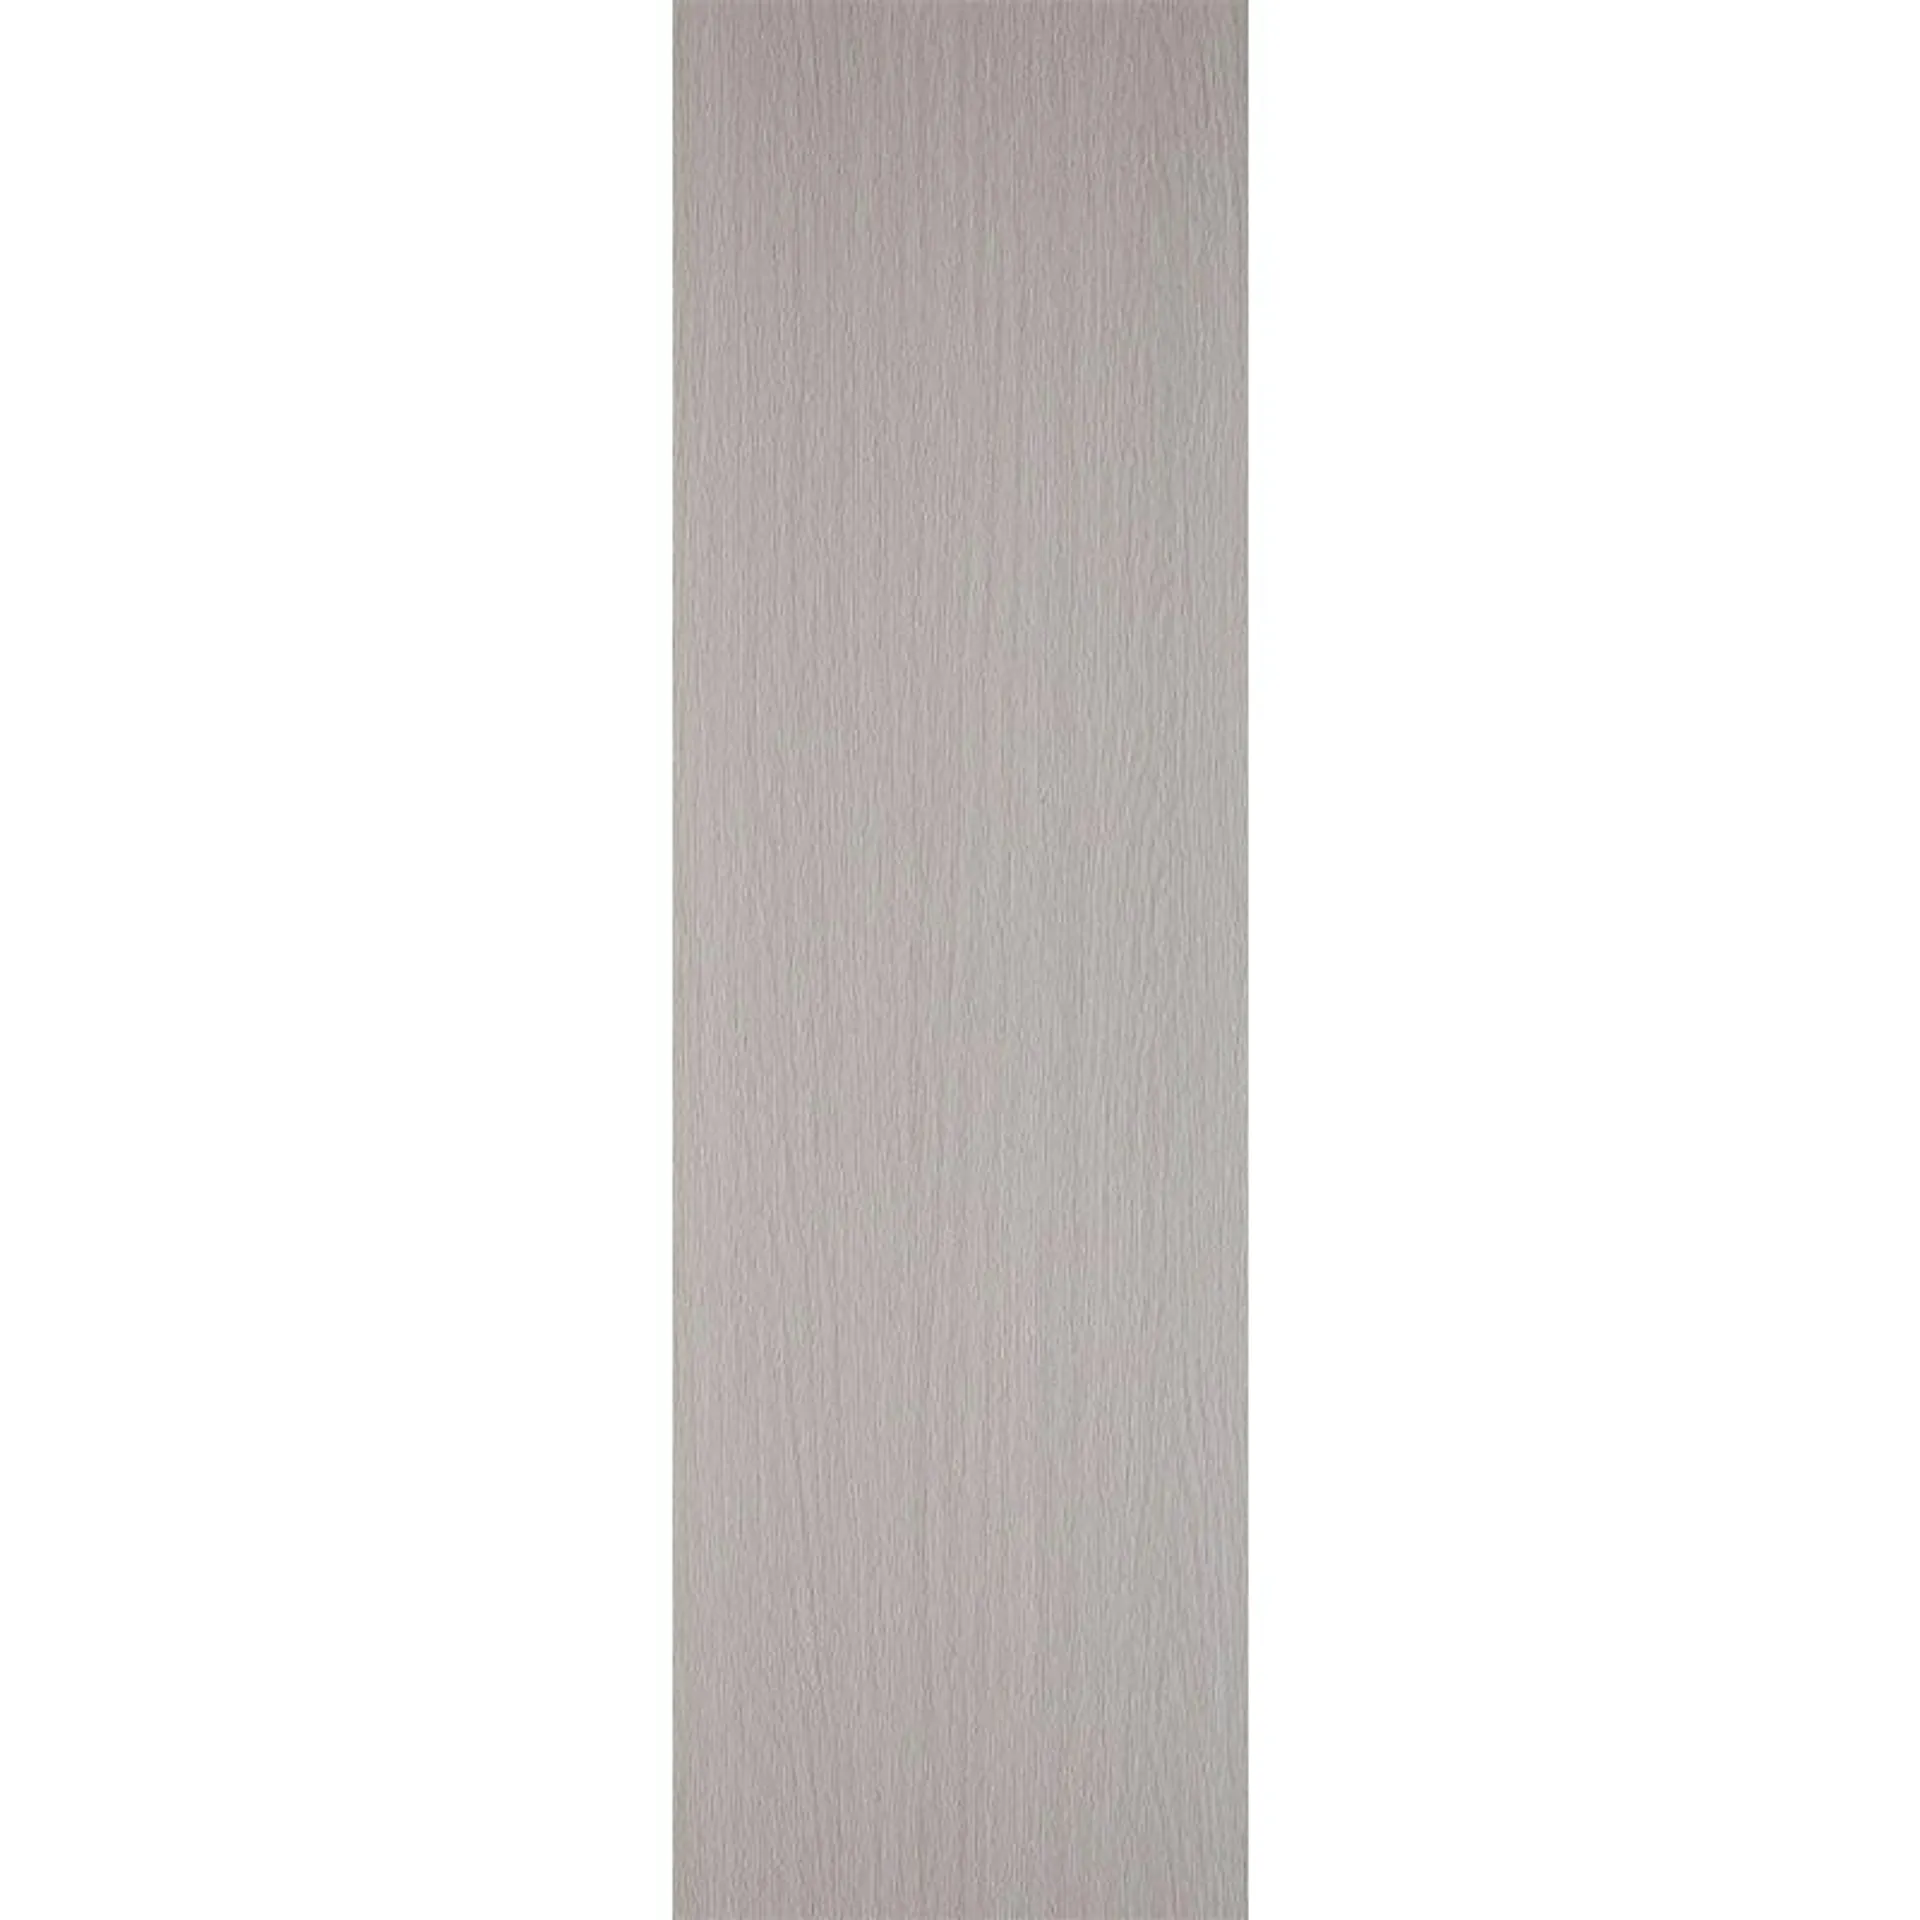 Birchwood Ash 3.95m x 300mm PVC Ceiling